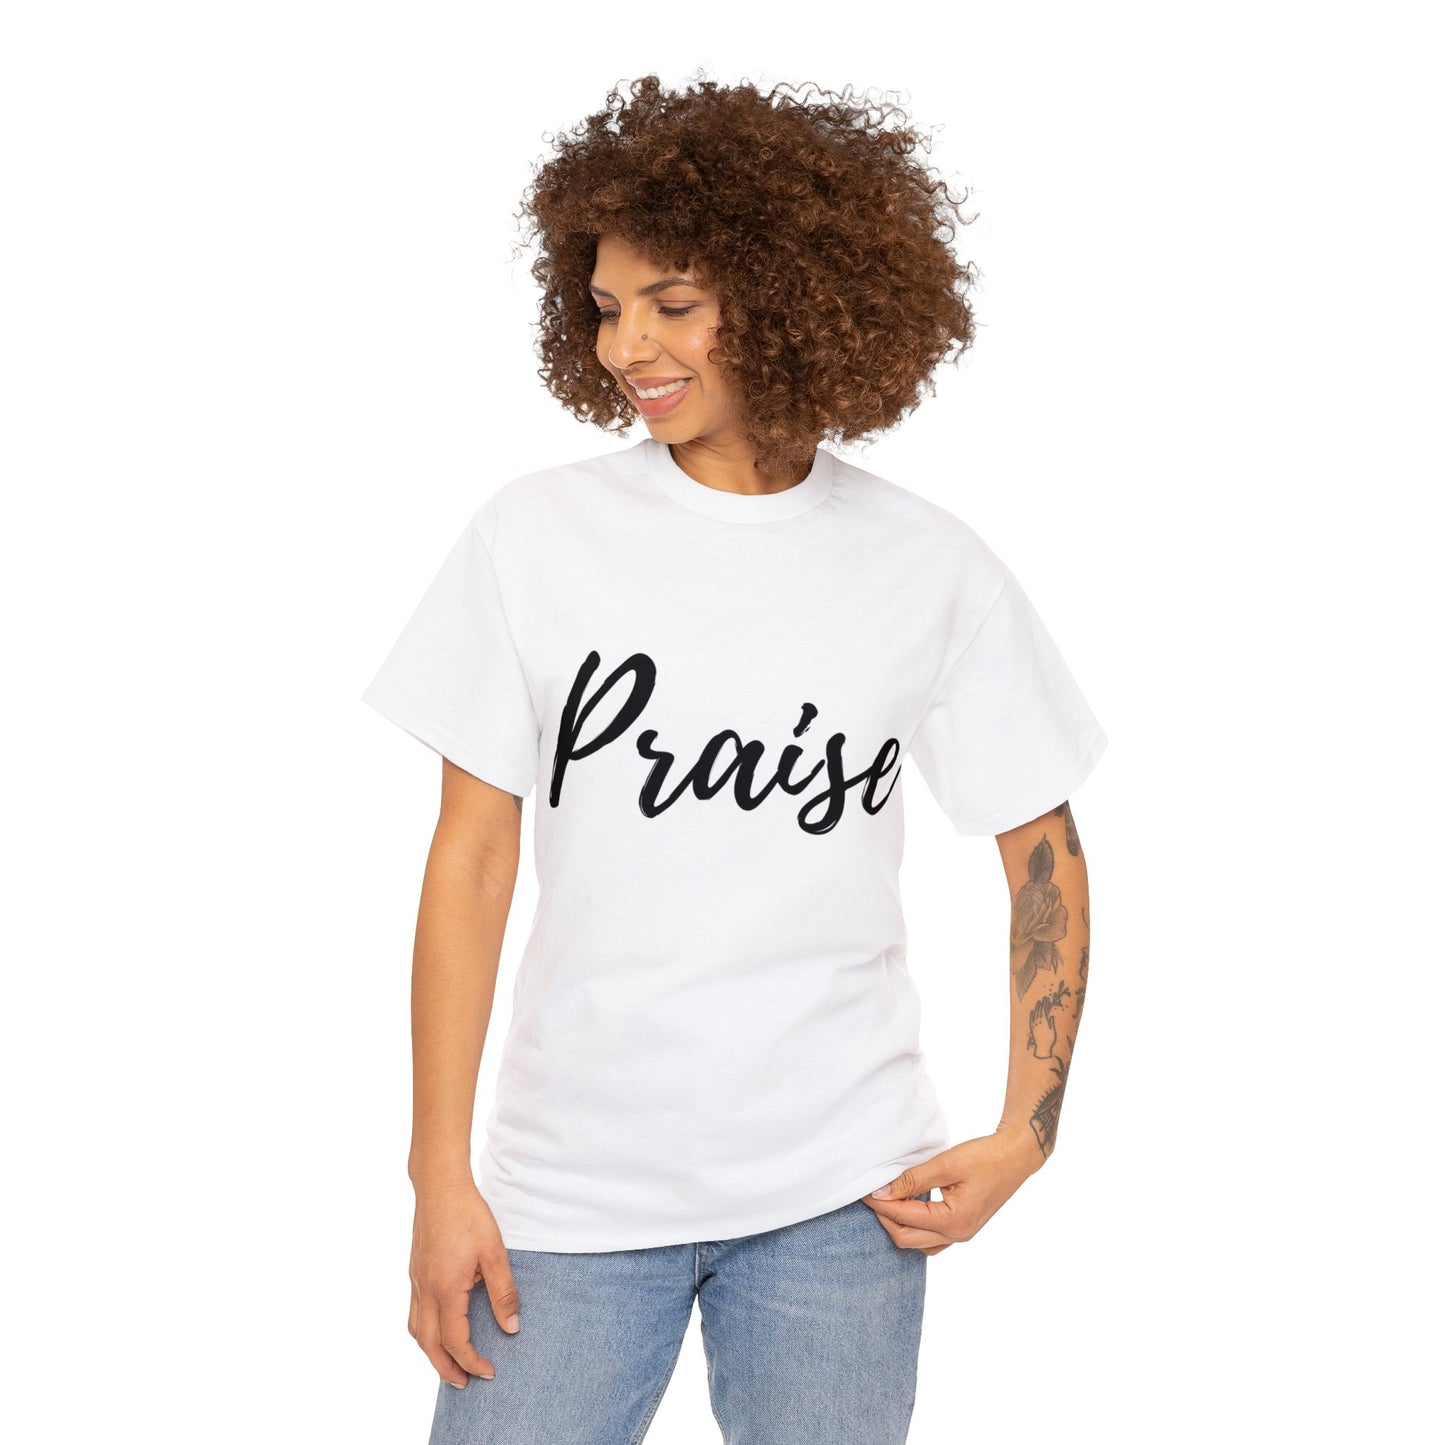 Praise T-Shirts